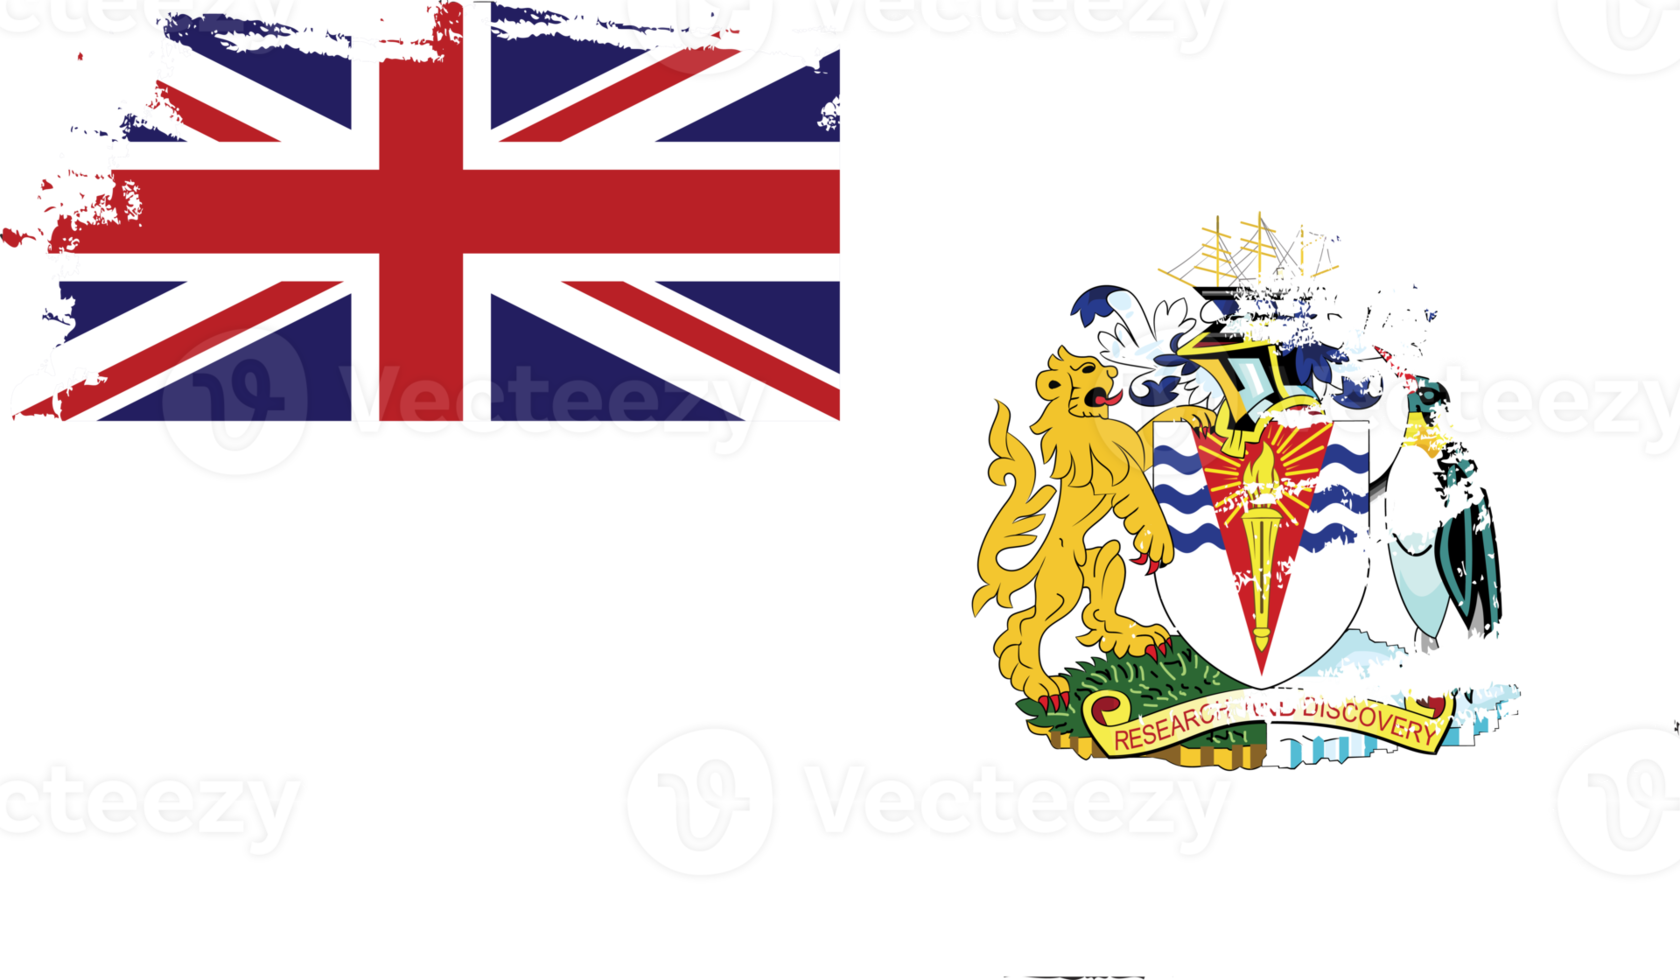 bandiera del territorio antartico britannico con texture grunge png